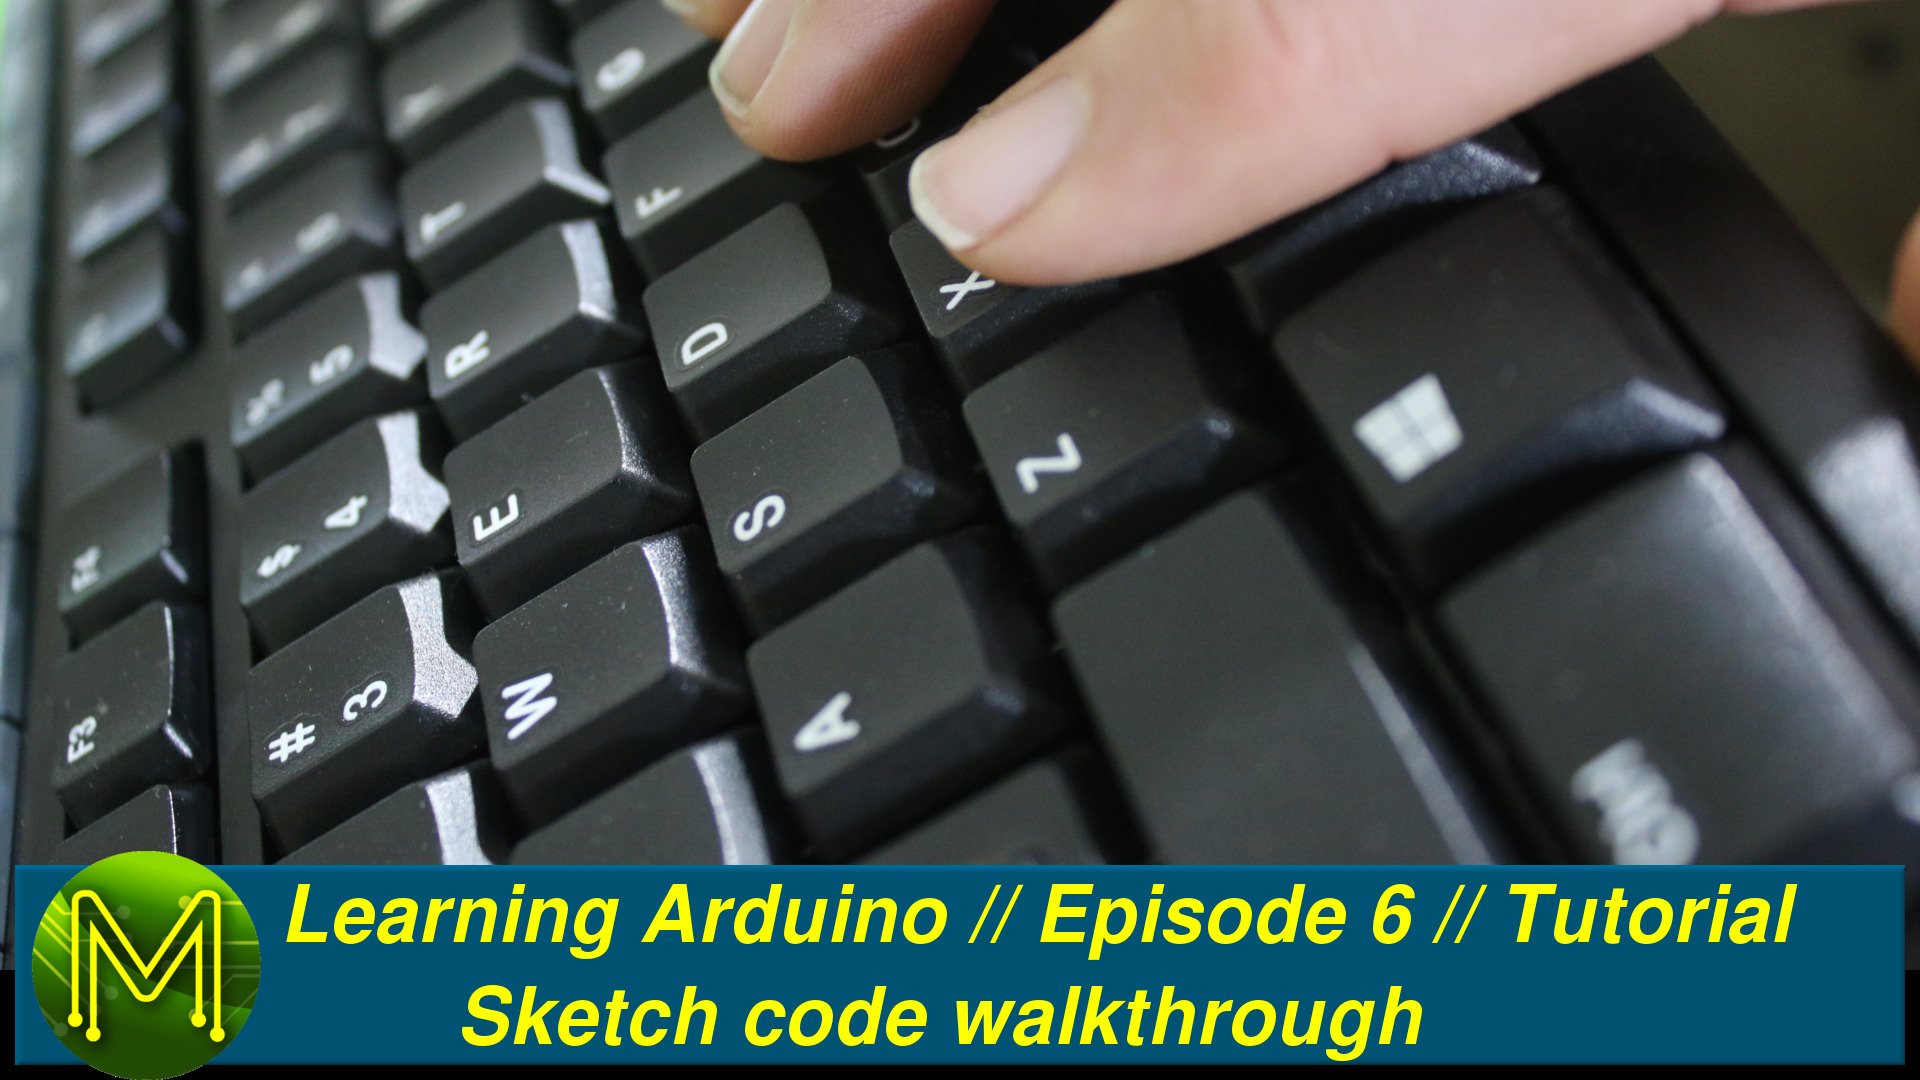 Learning Arduino: Sketch code walkthrough // Episode 6 // Tutorial